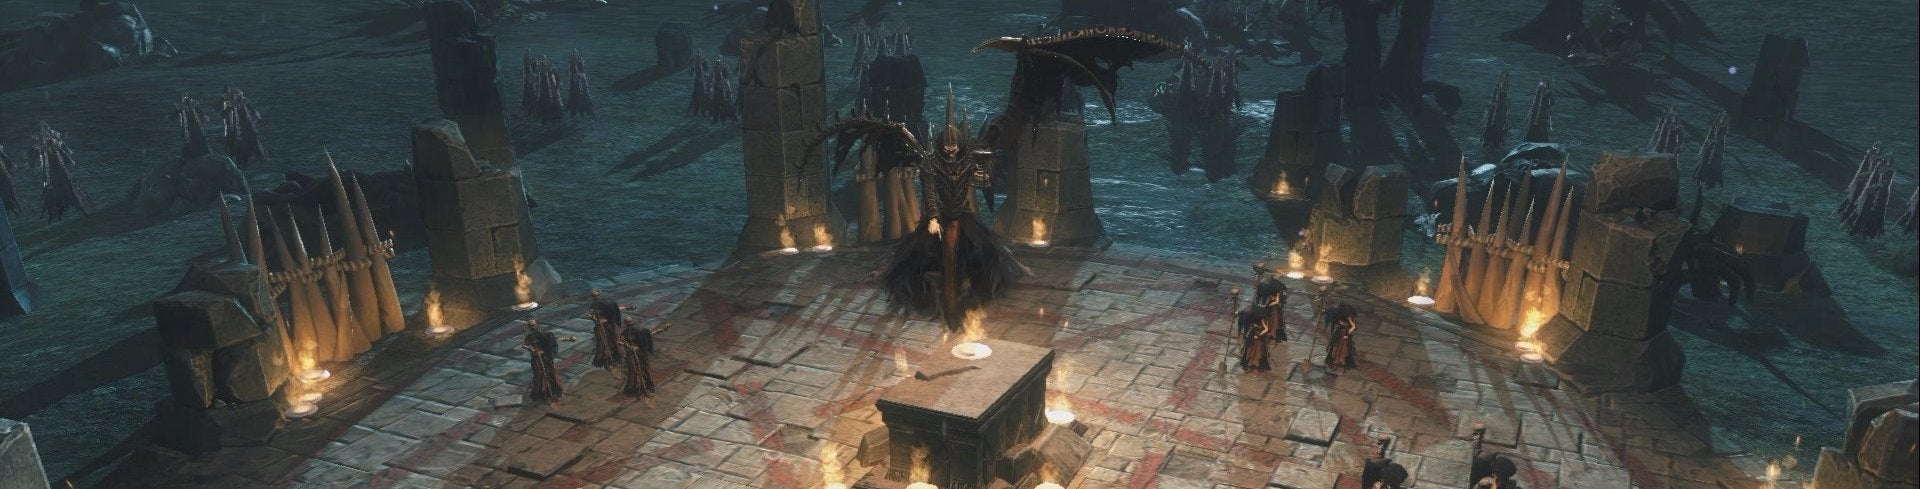 Afbeeldingen van Age of Wonders III: Eternal Lords review